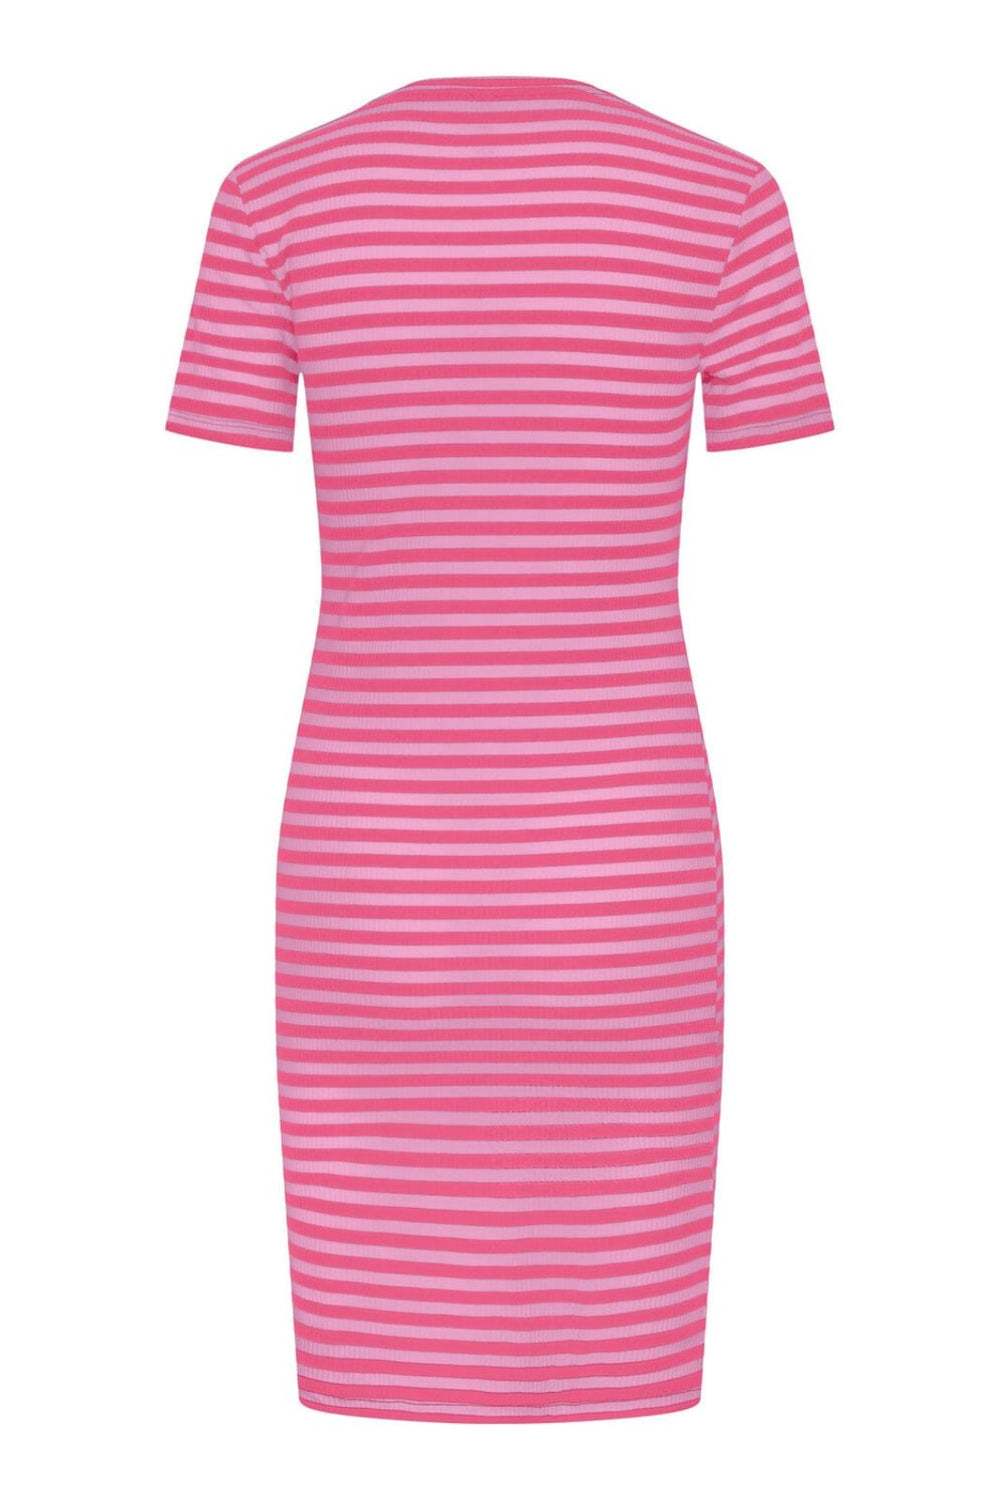 Pieces - Pcruka Ss Dress - 4484667 Hot Pink pastel lavender Kjoler 